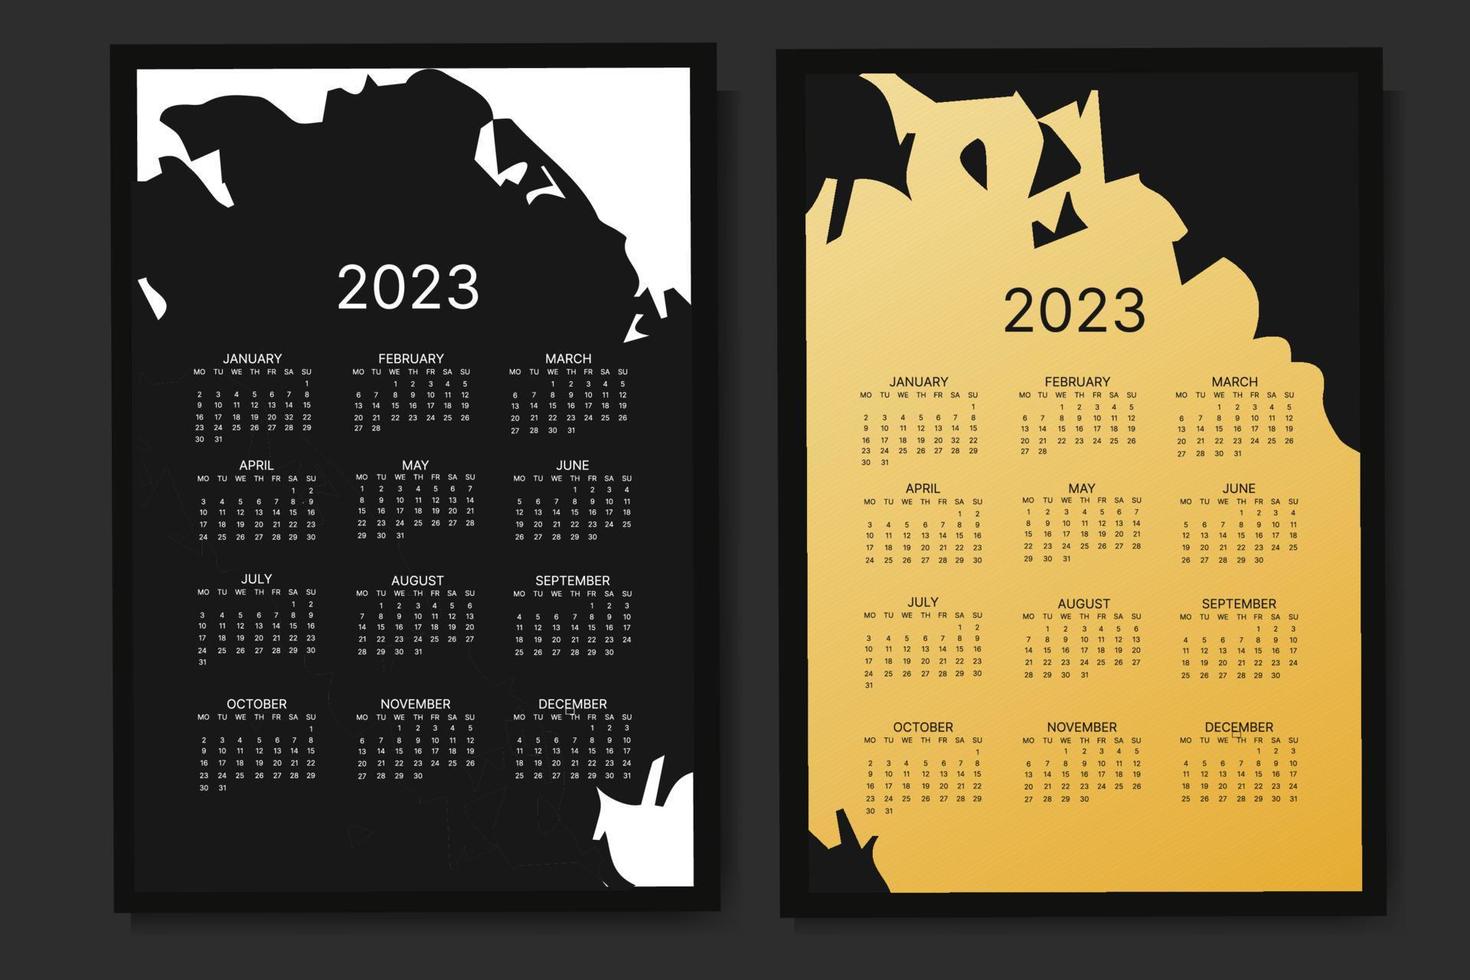 klassischer monatskalender für 2023. kalender mit abstrakten formen, schwarz-goldene farbe, vektorillustration. vektor